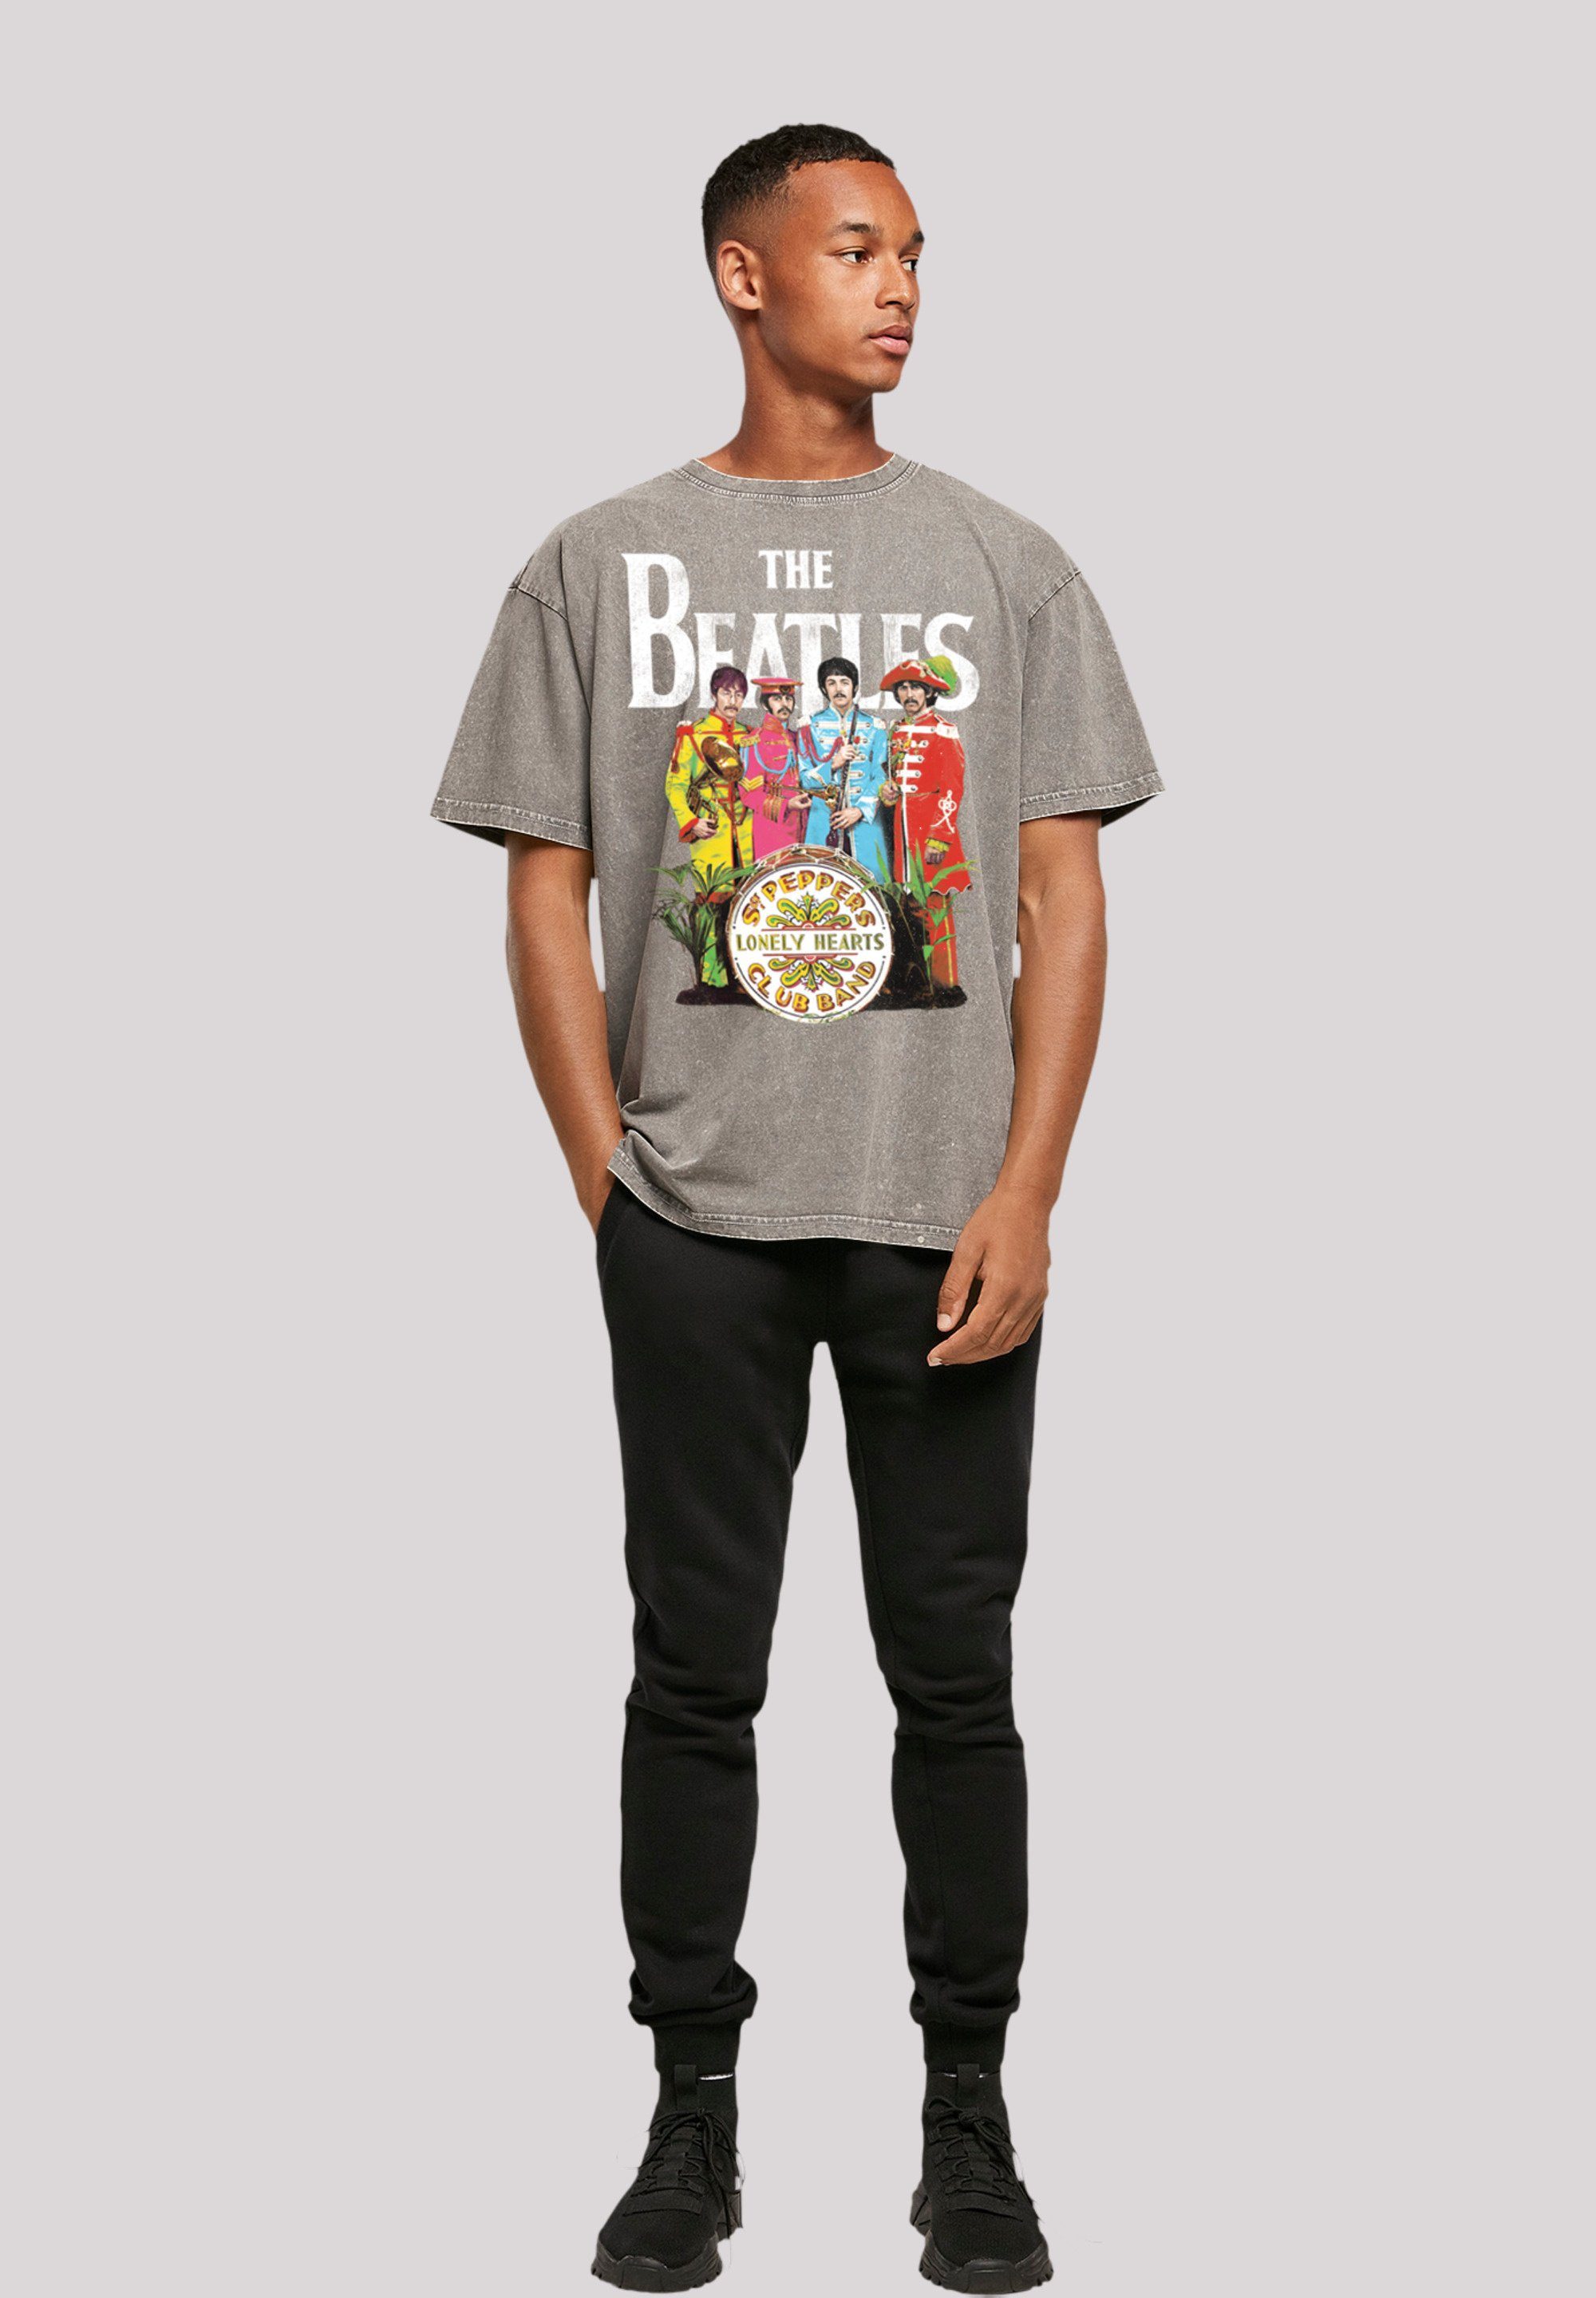 Sgt The T-Shirt Asphalt Beatles Print F4NT4STIC Pepper